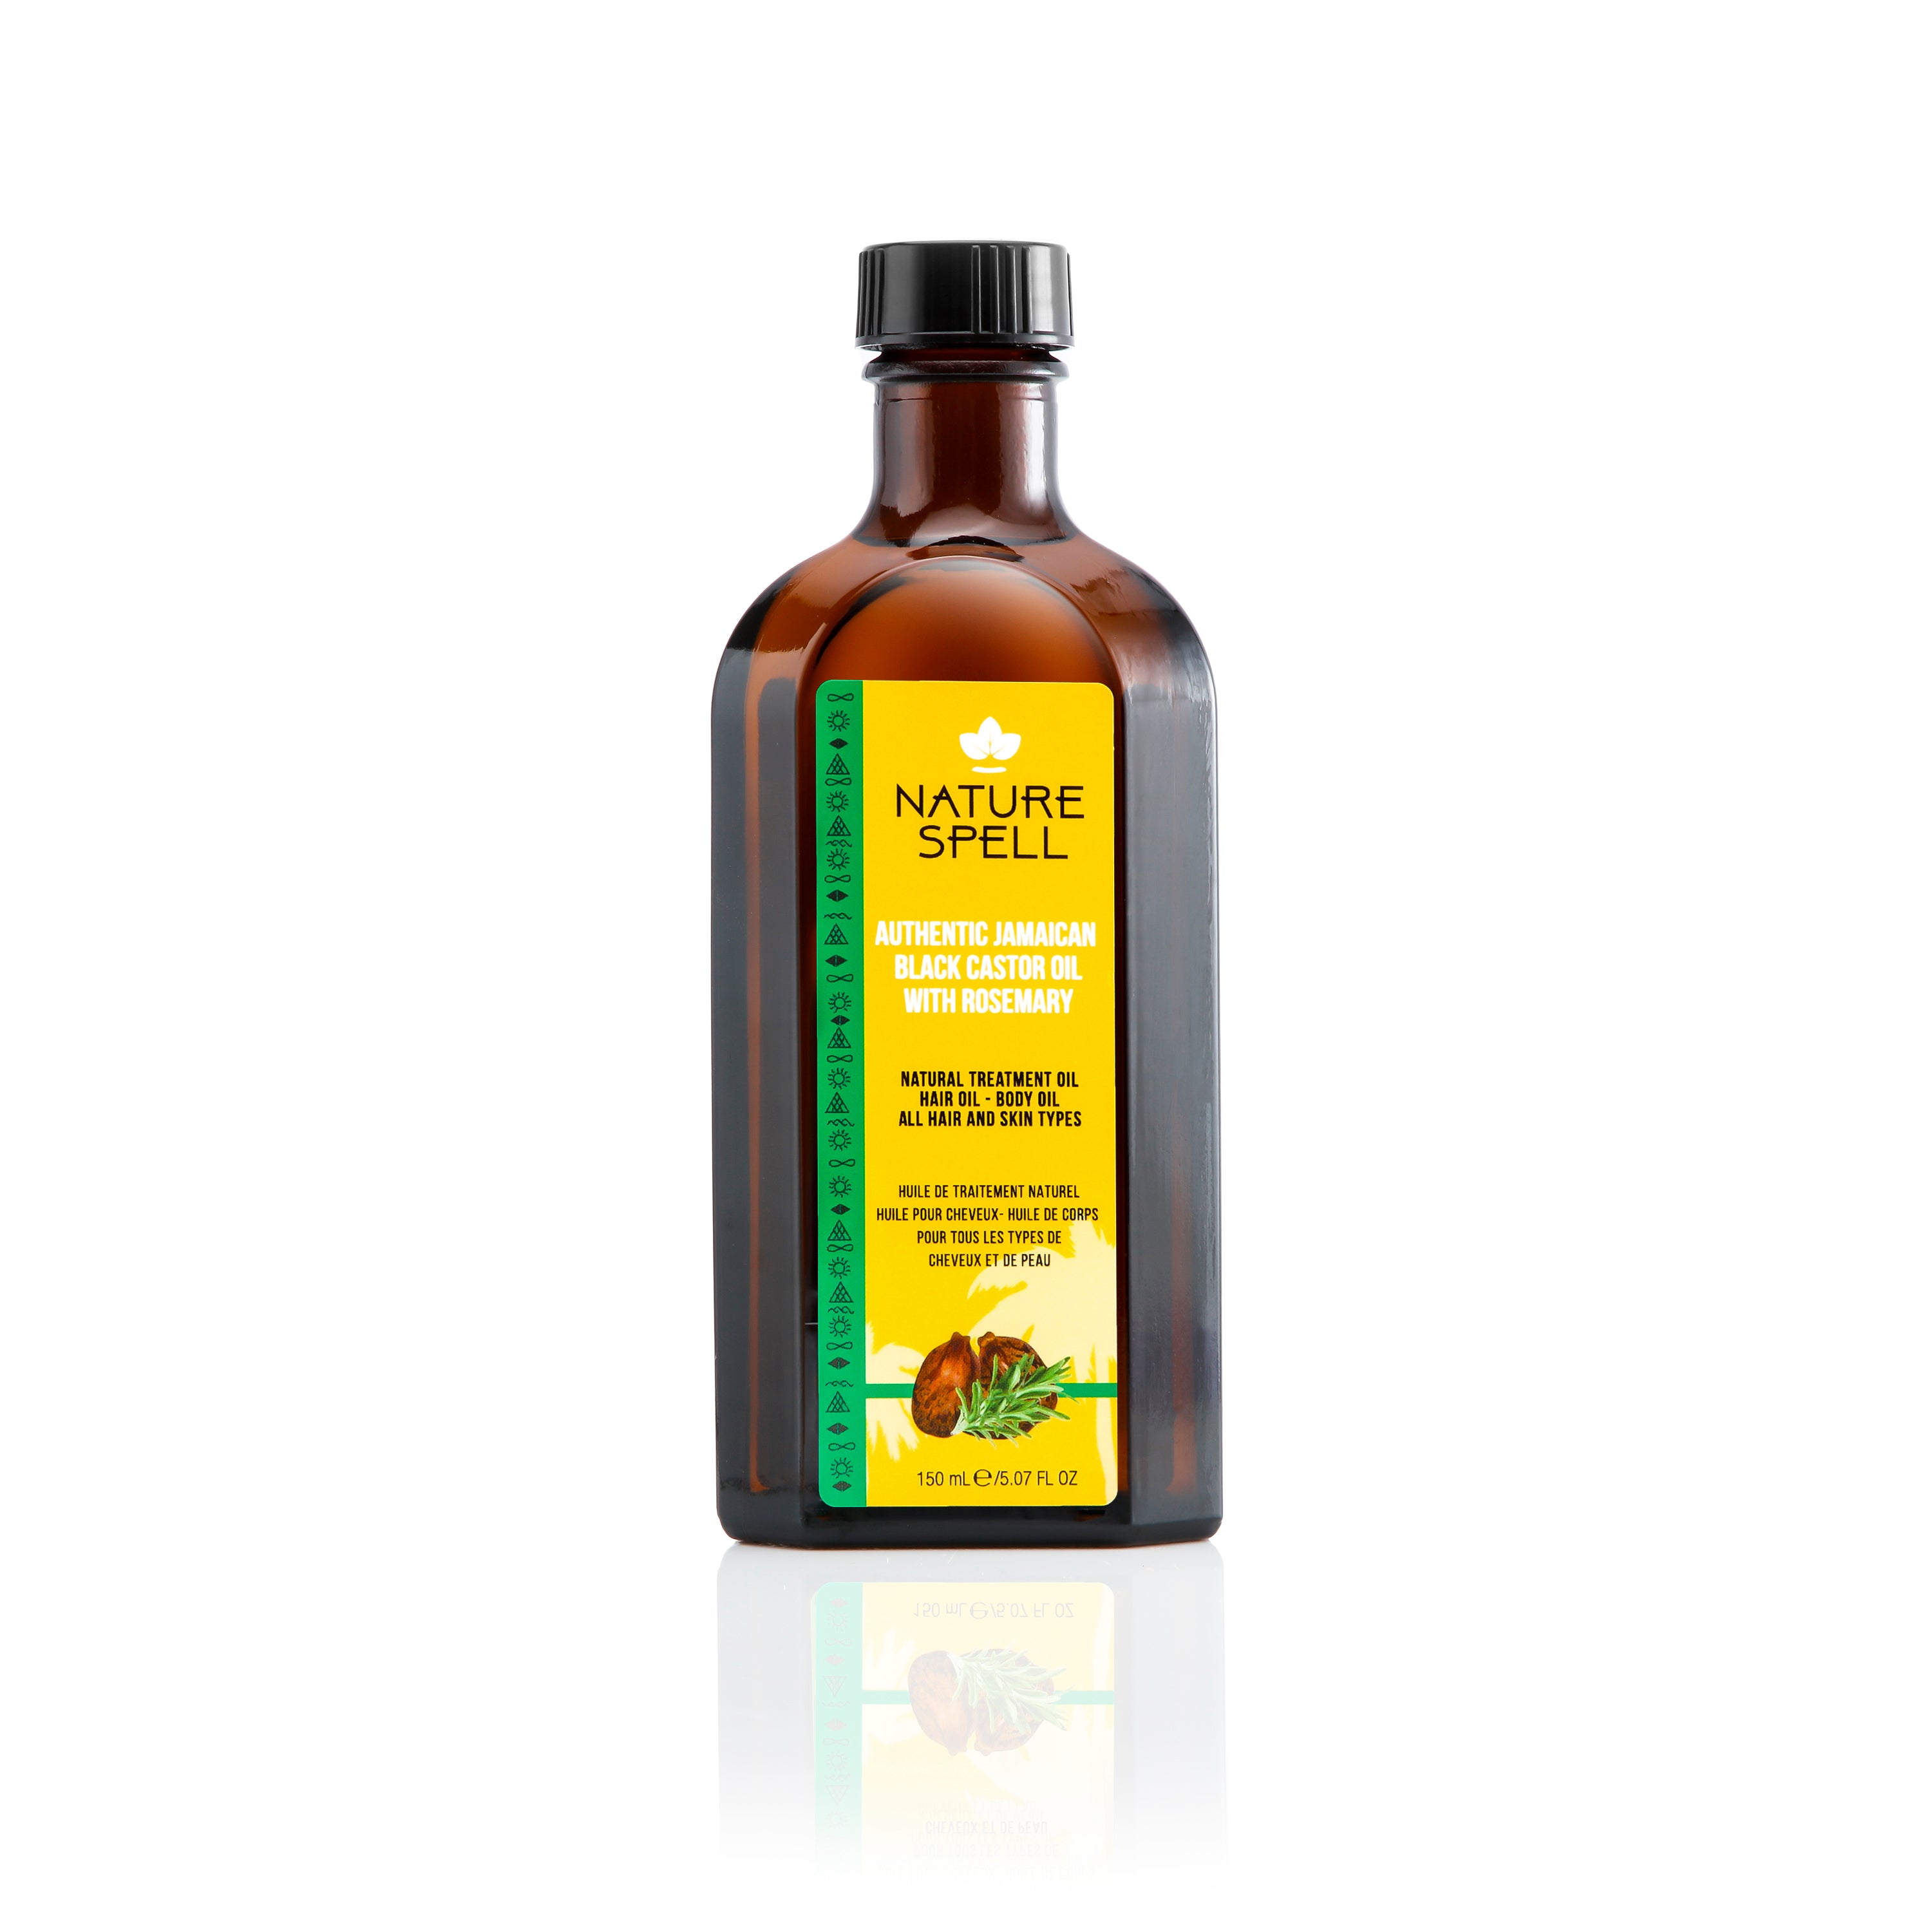 The Nature Spell Jamaican Black Castor Oil is a multi purpose oil